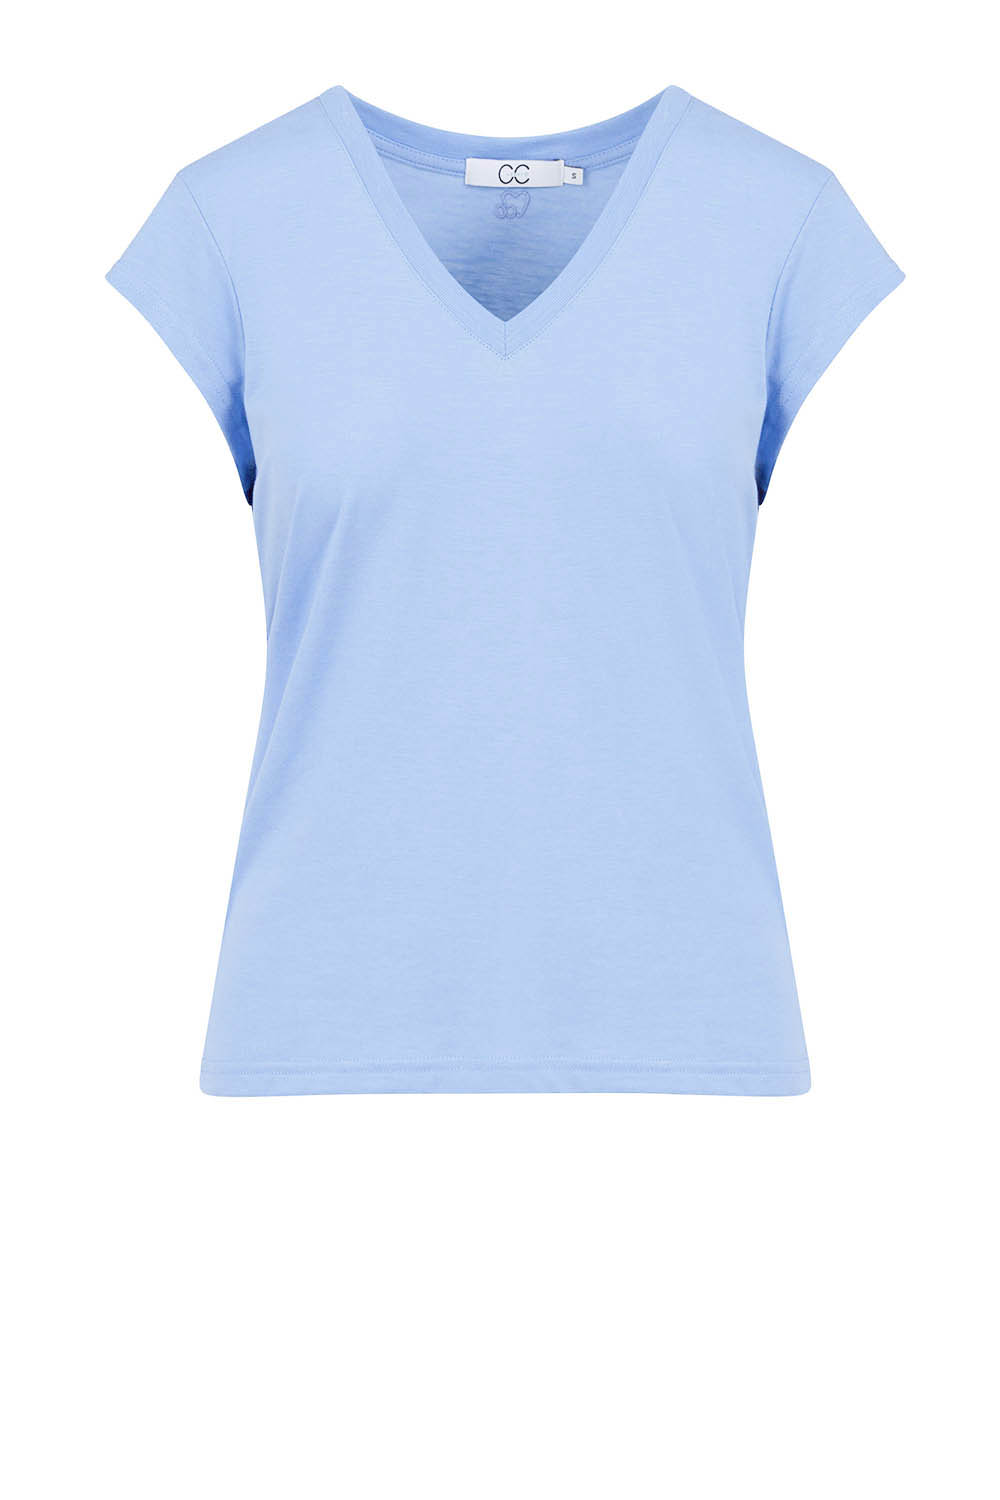 CC HEART Dames Tops & T-shirts Basic V-neck T-shirt Blauw